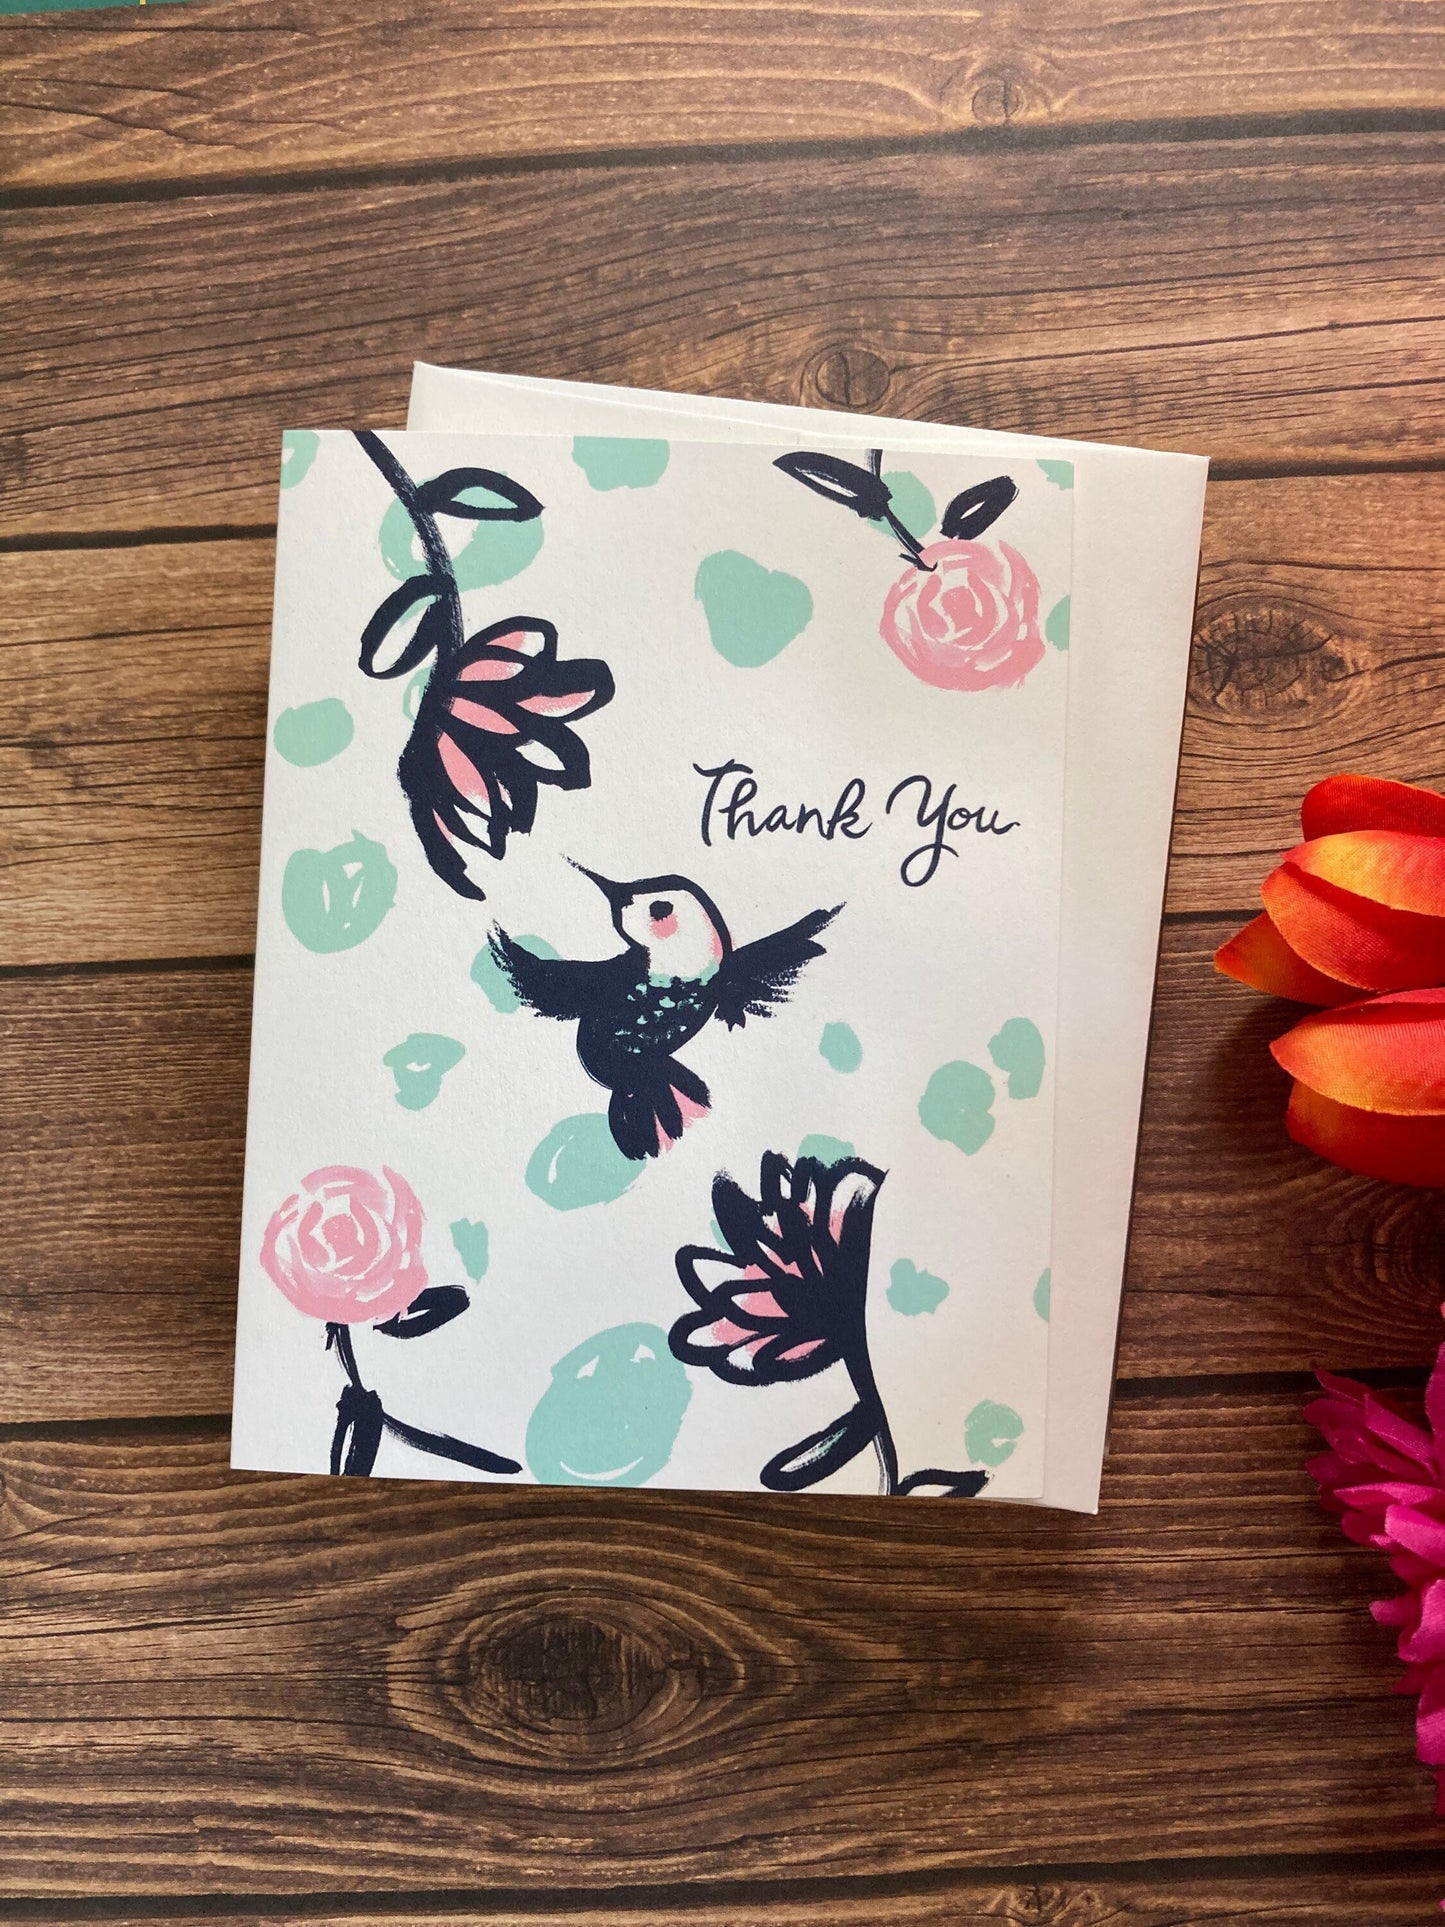 THANKS - Navy and Pink Hummingbird Notecard - appreciation, gratitude, Eco-Friendly Notecards by Adriana Bergstrom (Adriprints)